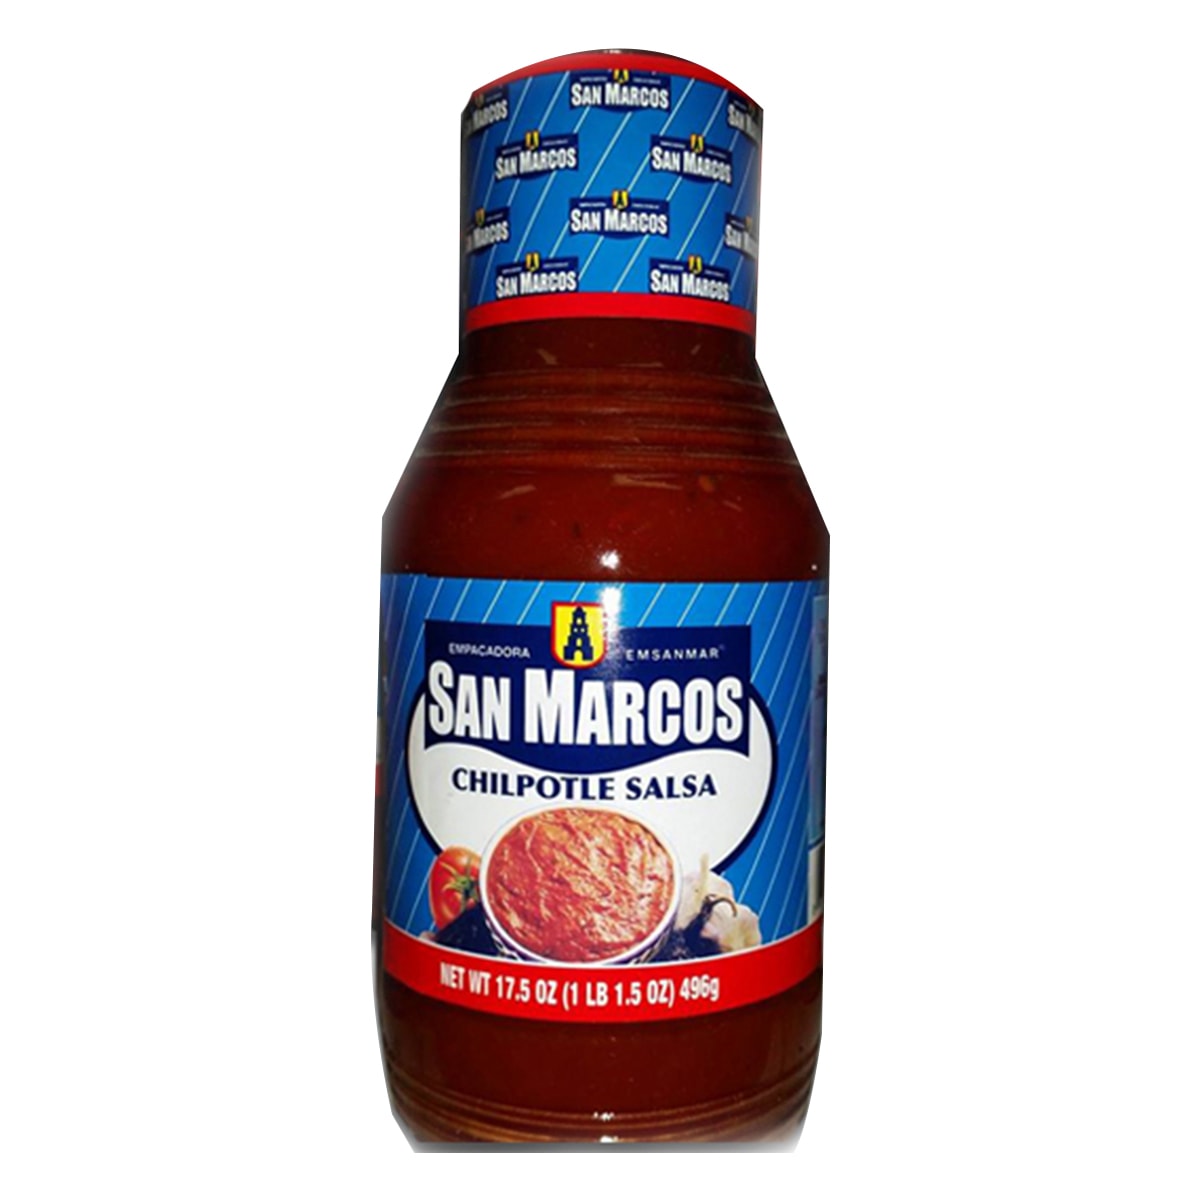 Buy San Marcos Chipotle Salsa - 496 gm